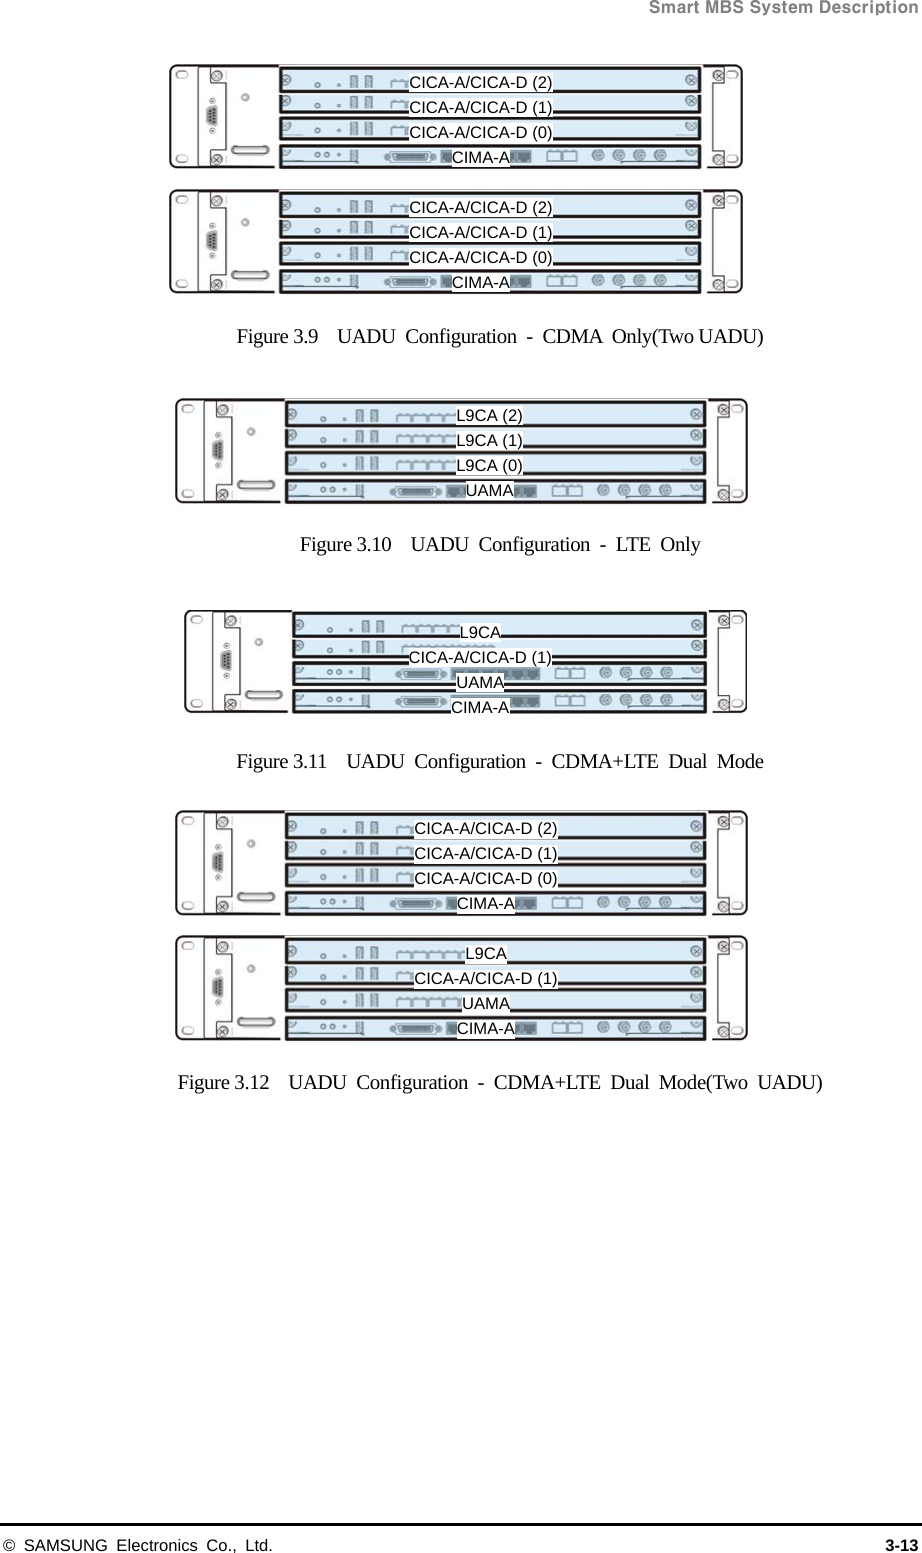  Smart MBS System Description © SAMSUNG Electronics Co., Ltd.  3-13 Figure 3.9  UADU Configuration - CDMA Only(Two UADU)  Figure 3.10  UADU Configuration - LTE Only  Figure 3.11  UADU Configuration - CDMA+LTE Dual Mode  Figure 3.12  UADU Configuration - CDMA+LTE Dual Mode(Two UADU)     L9CA (2) L9CA (1) L9CA (0) UAMA CICA-A/CICA-D (2) CICA-A/CICA-D (1) CICA-A/CICA-D (0) CIMA-A CICA-A/CICA-D (2) CICA-A/CICA-D (1) CICA-A/CICA-D (0) CIMA-A L9CA CICA-A/CICA-D (1) UAMA CIMA-A L9CA CICA-A/CICA-D (1) UAMA CIMA-A CICA-A/CICA-D (2) CICA-A/CICA-D (1) CICA-A/CICA-D (0) CIMA-A 